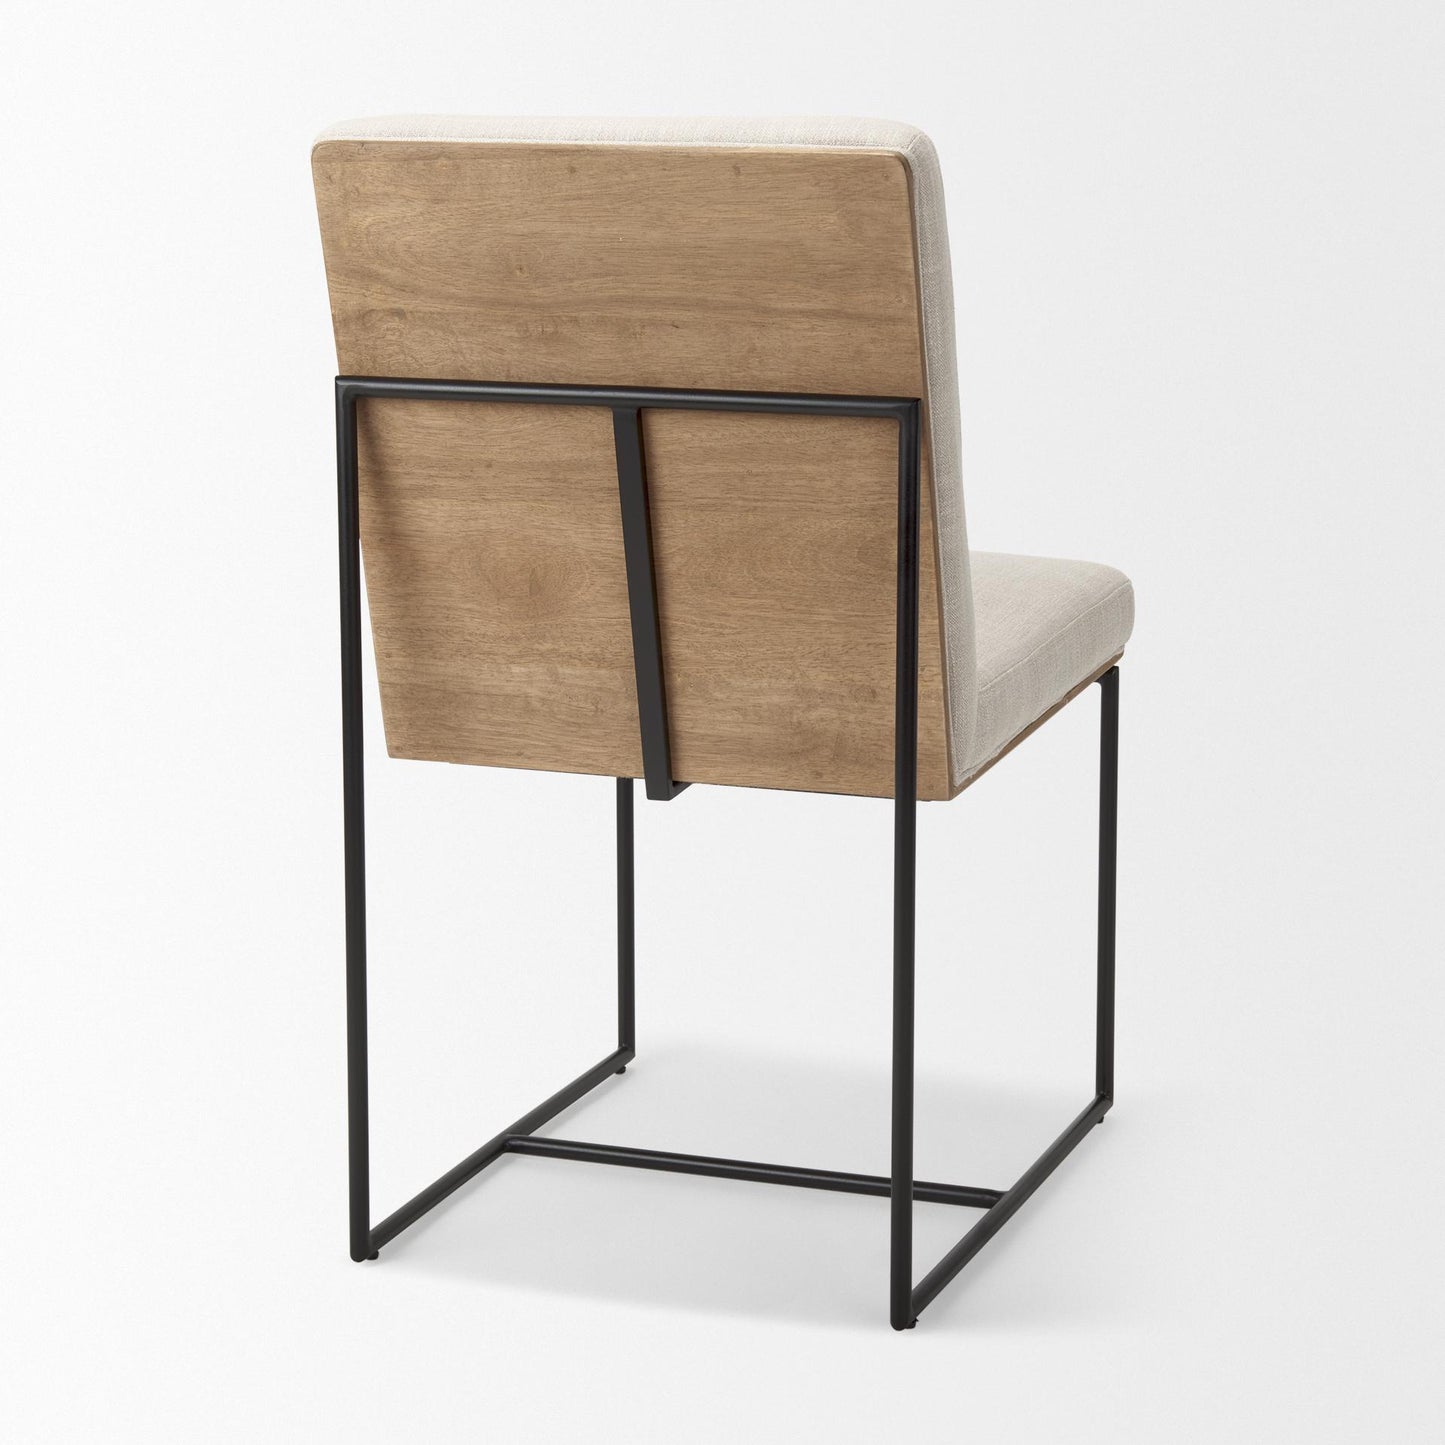 Stamford Beige Upholstered Seat w/ Wood Back, Black Metal Frame Dining Chair